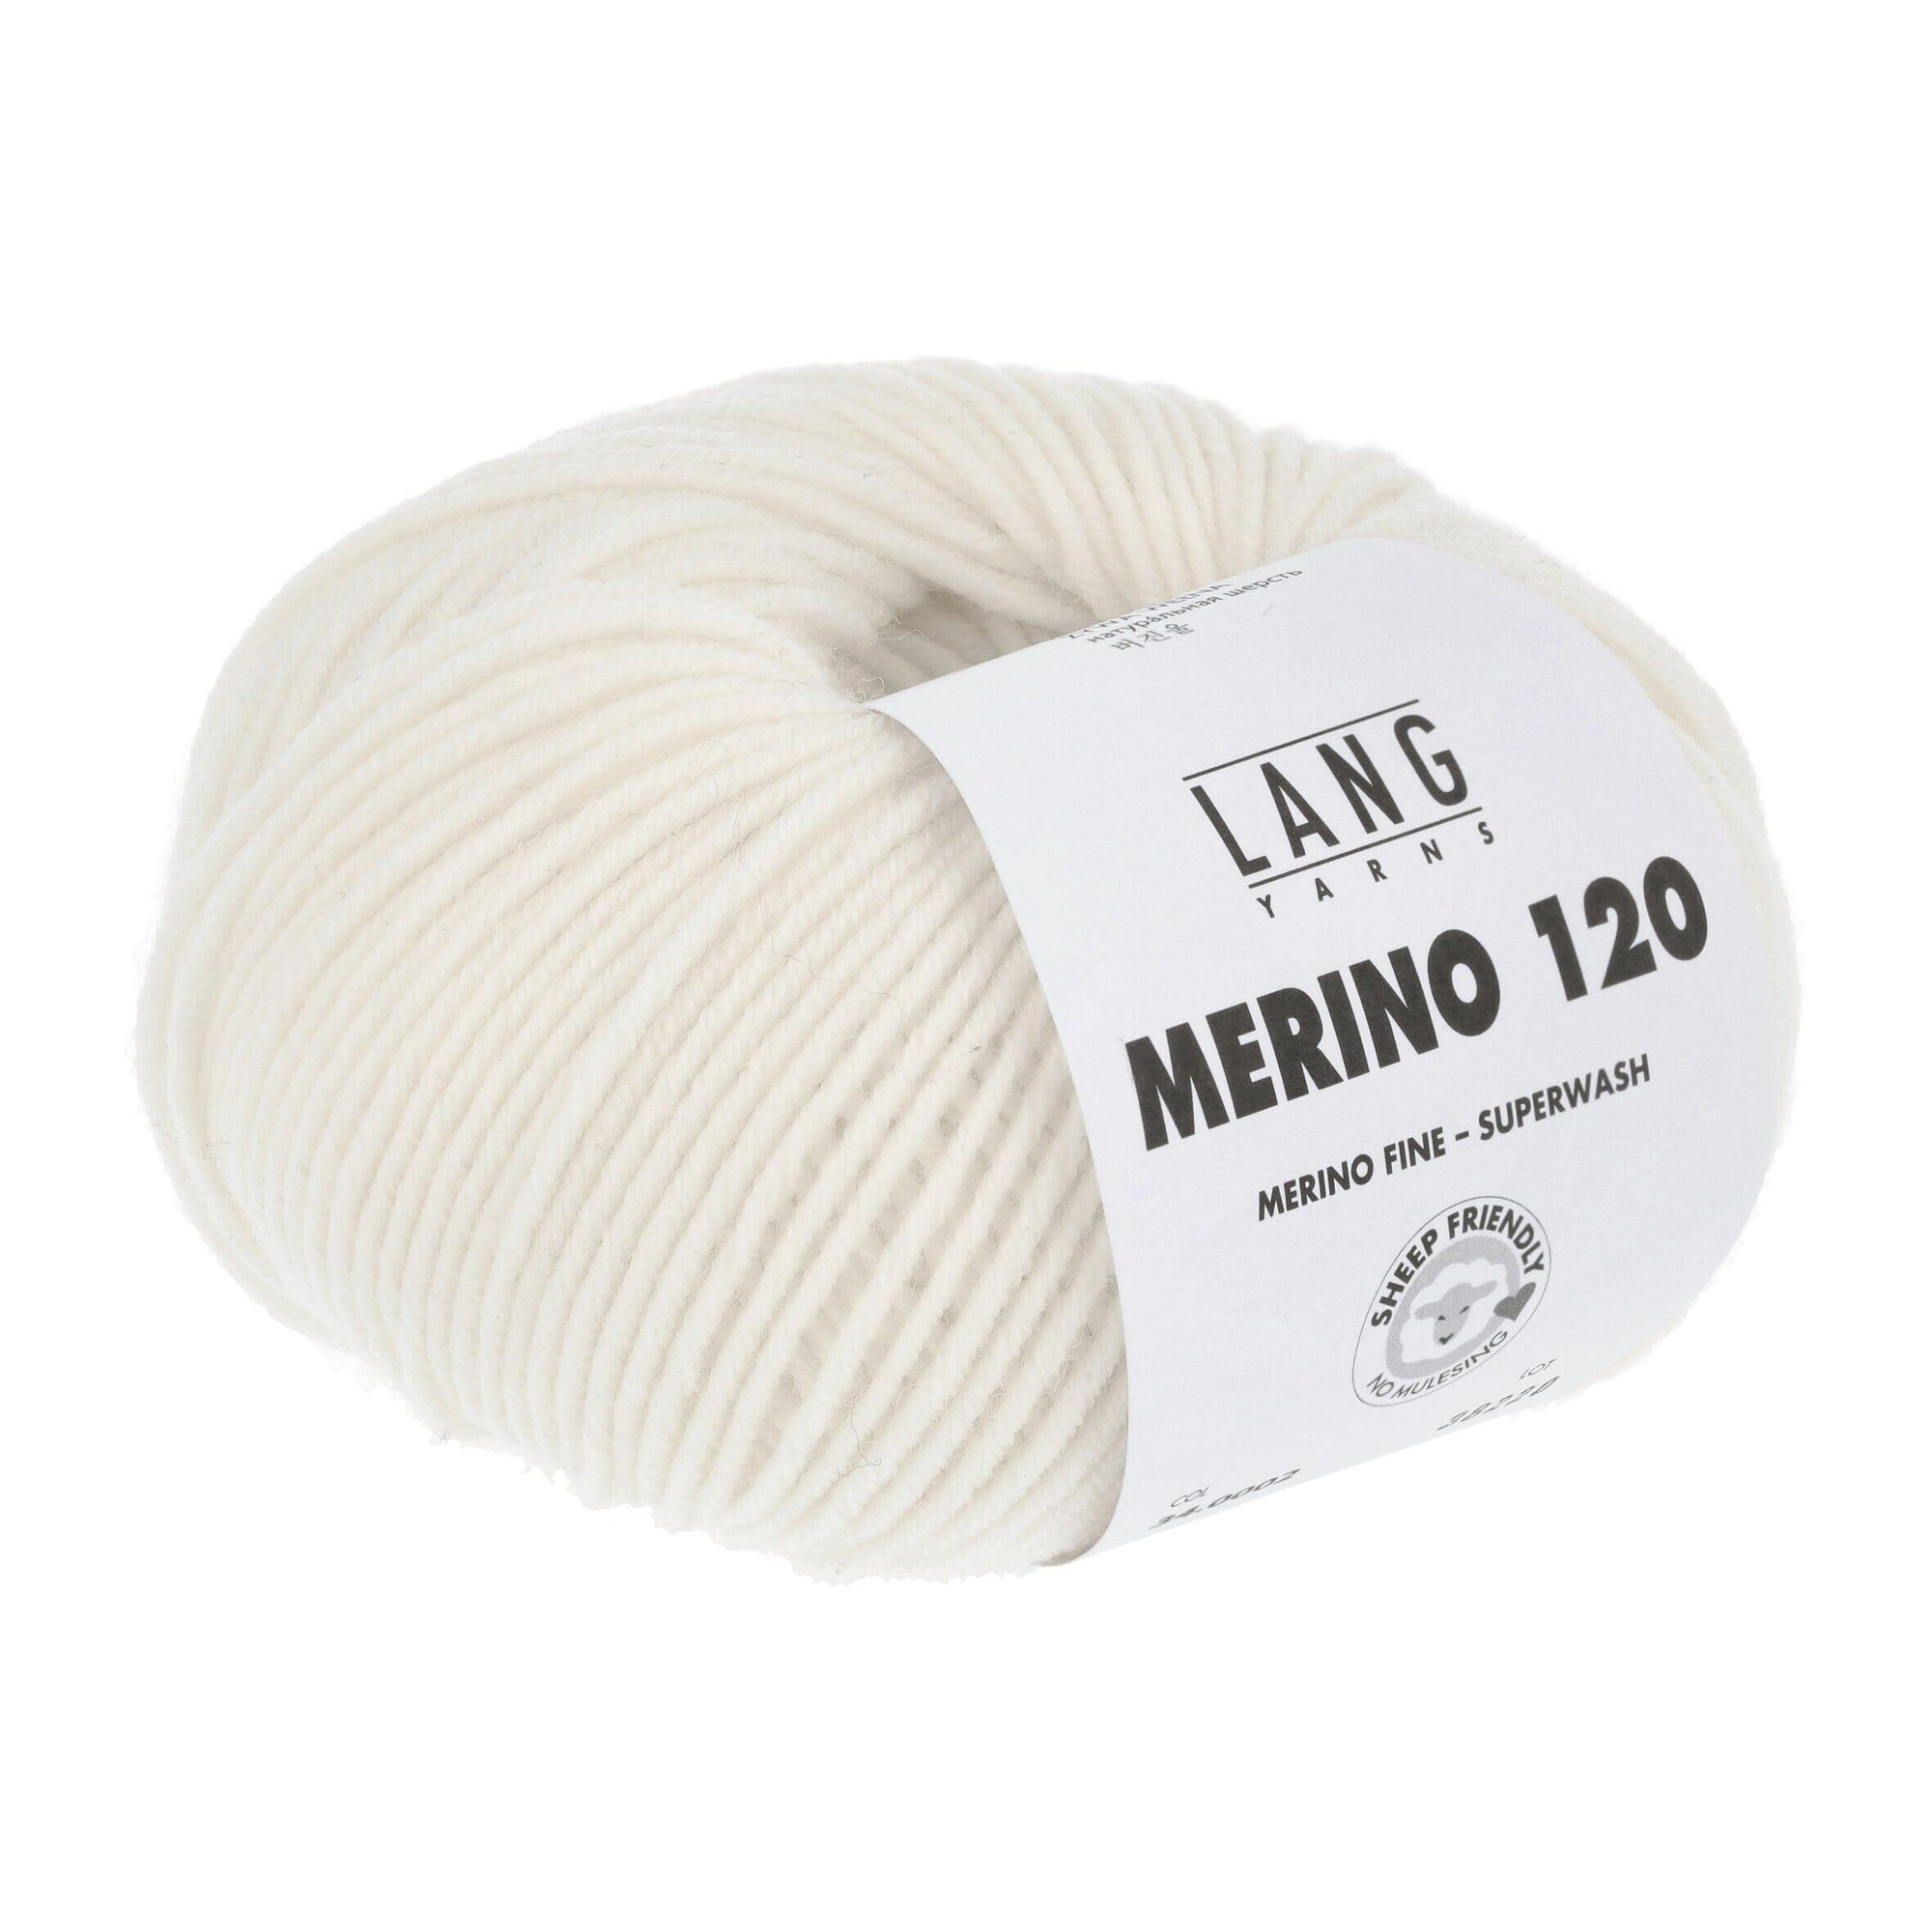 Lang Yarns Merino 120 - Tangled Yarn